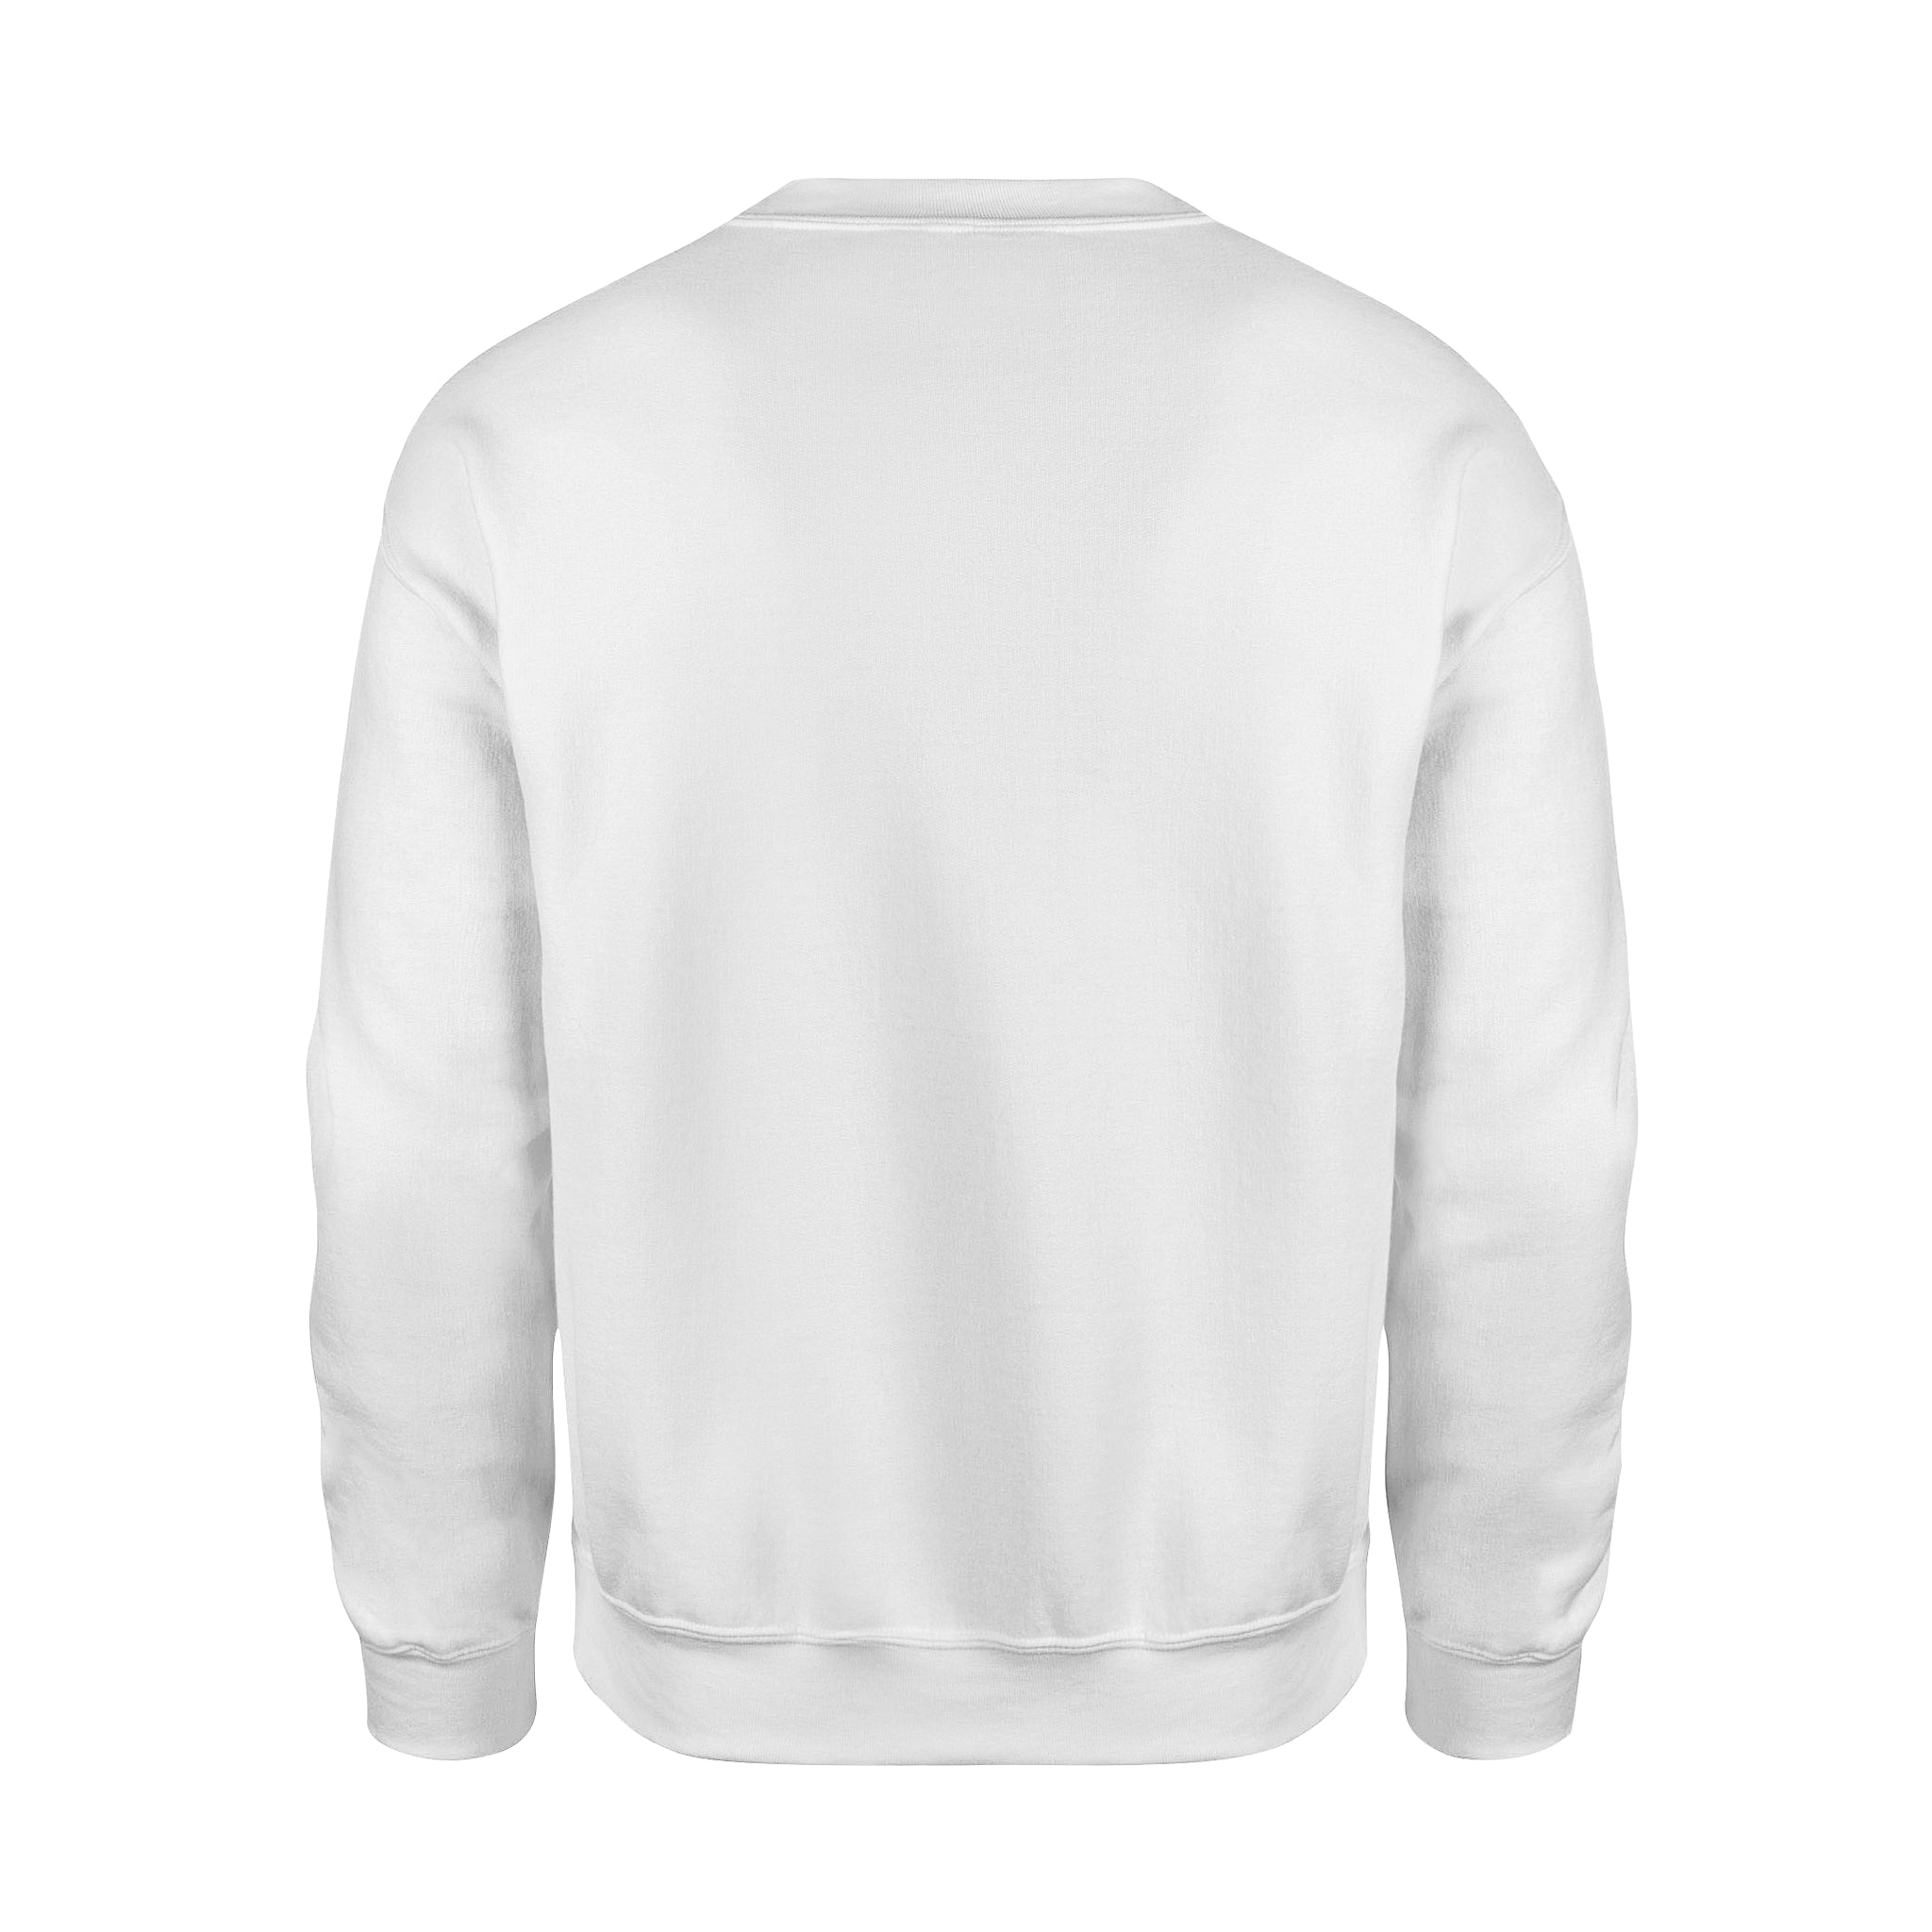 Go Explore Everyday -  Fleece Sweatshirt